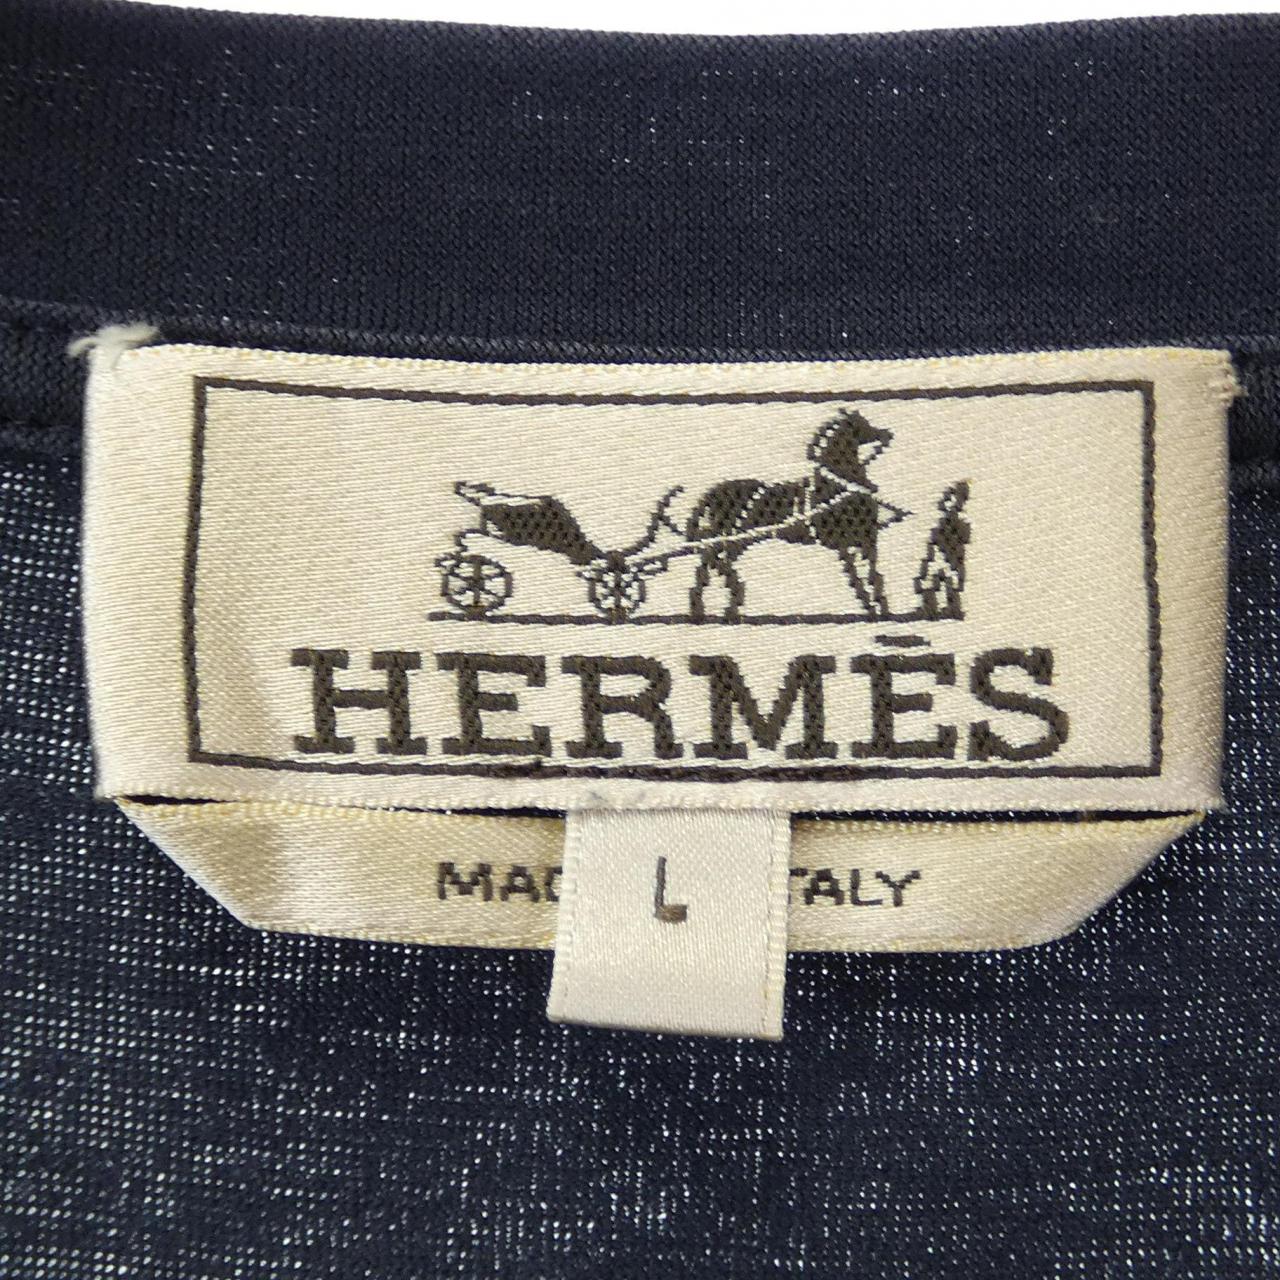 HERMES爱马仕T恤